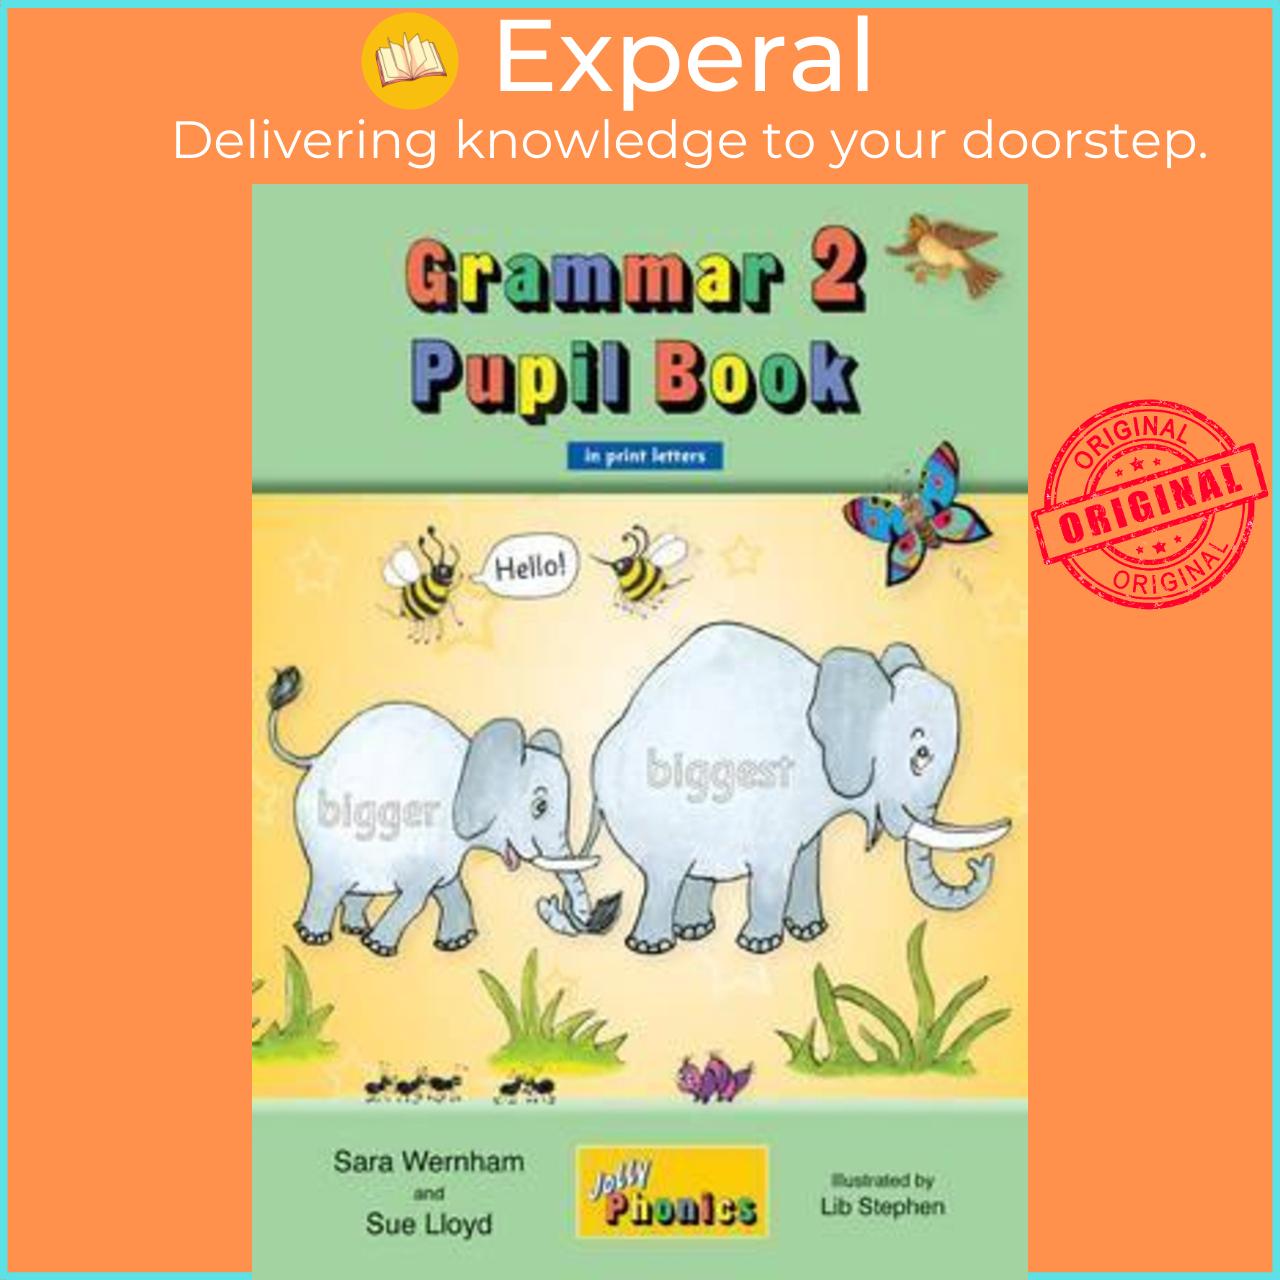 Sách - Grammar 2 Pupil Book : In Print Letters (British English edition) by Sara Wernham (UK edition, paperback)